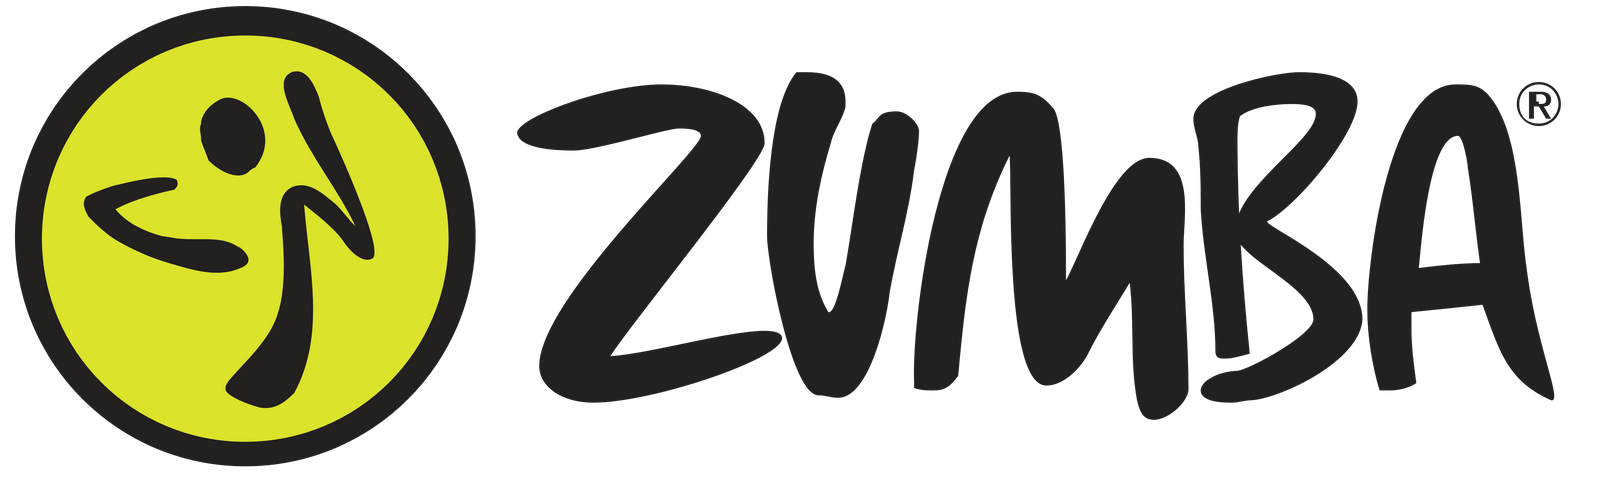 zumba fitness logo official